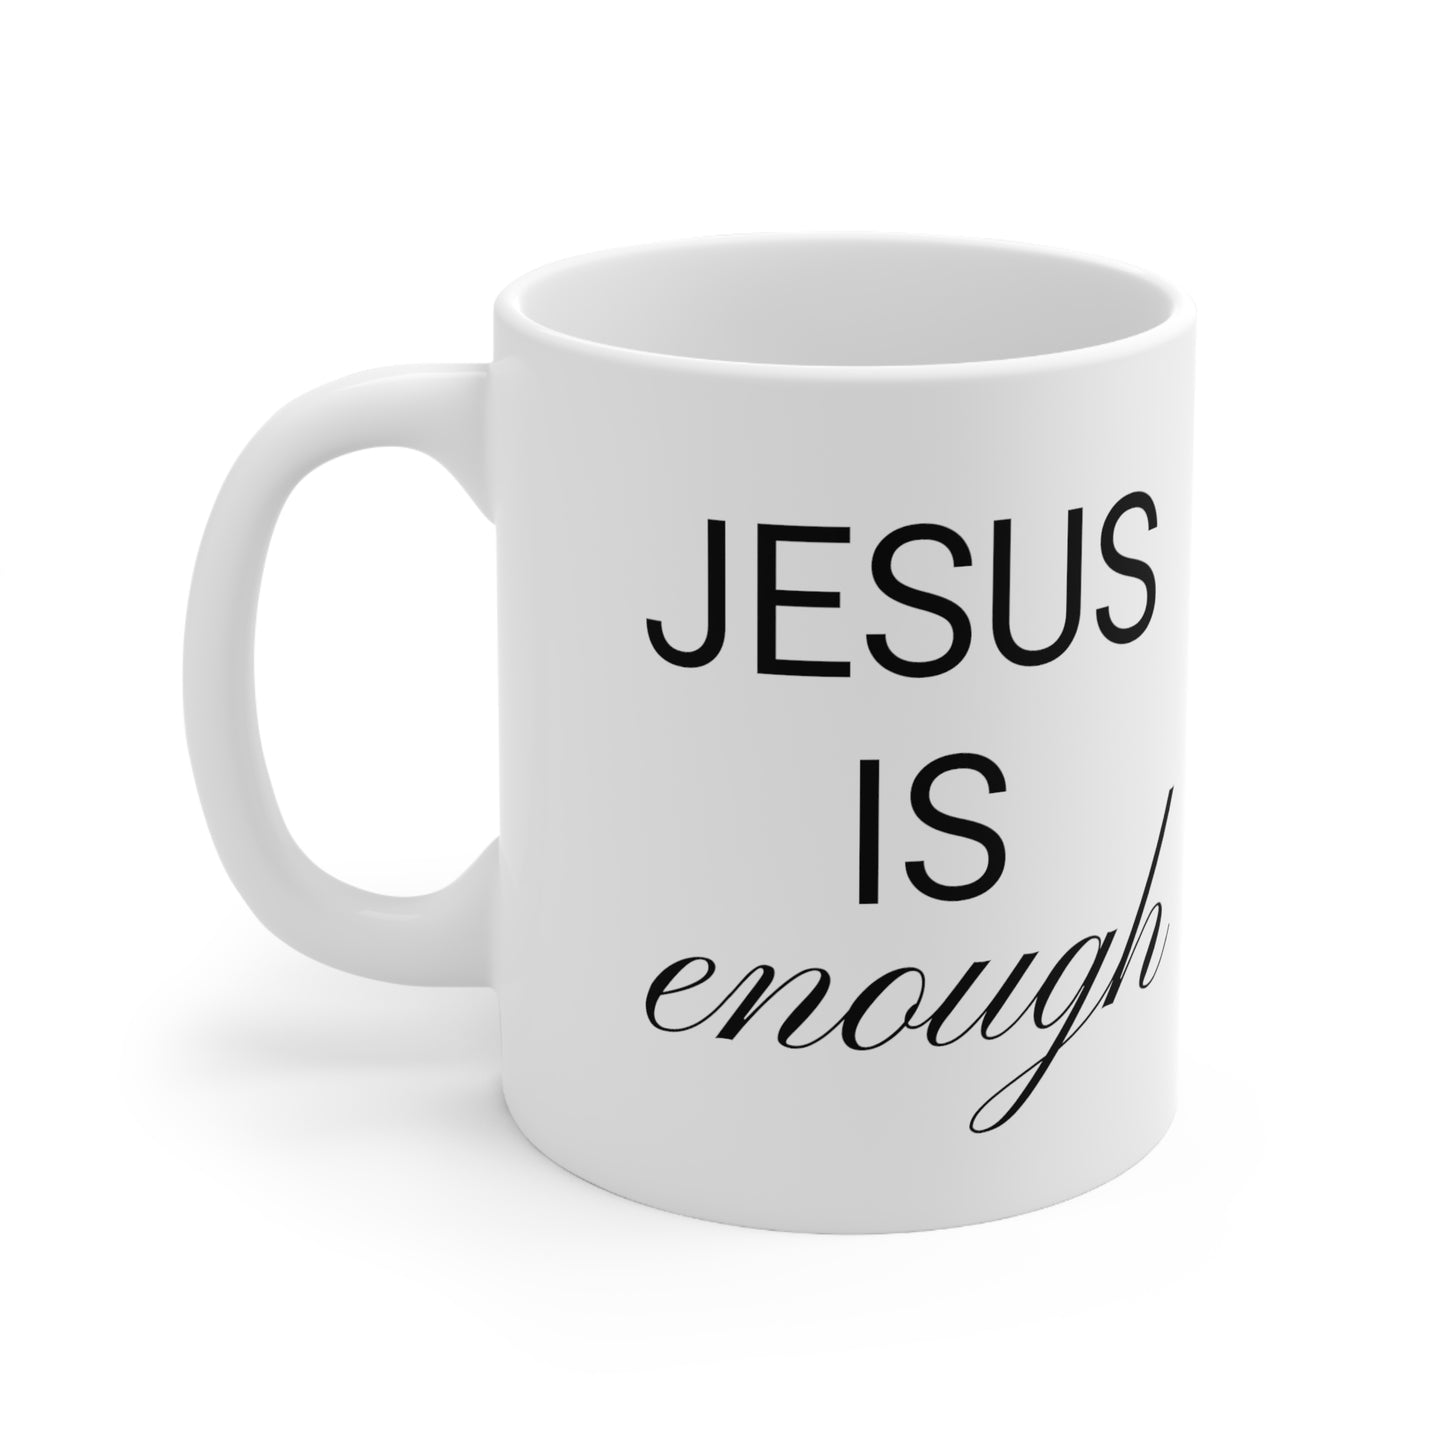 Jesus Is Enough White Ceramic Mug 11oz